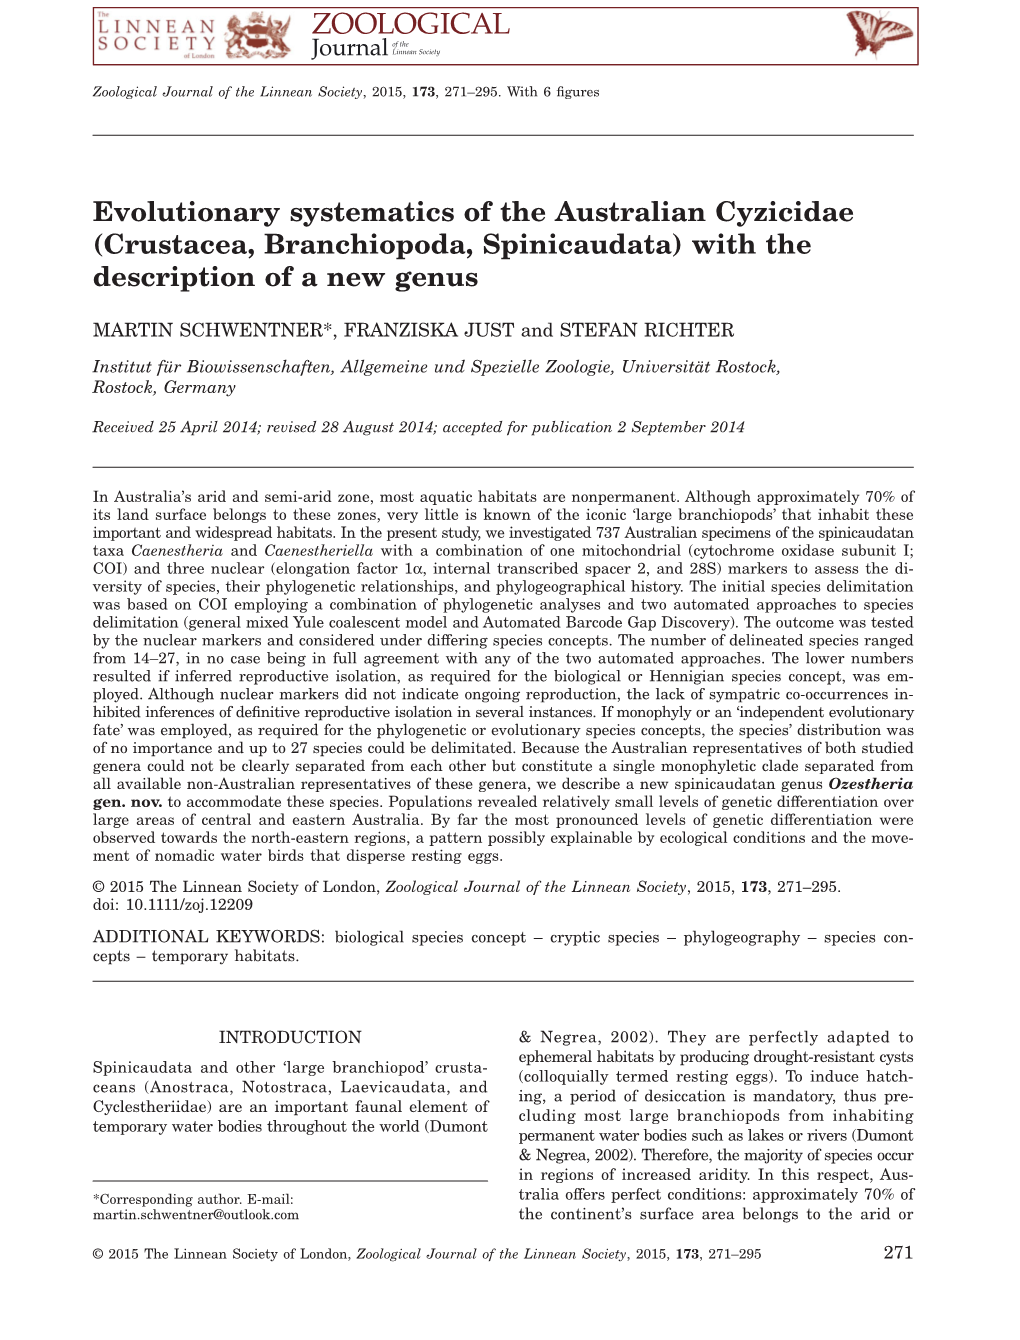 Evolutionary Systematics of the Australian Cyzicidae (Crustacea, Branchiopoda, Spinicaudata) with the Description of a New Genus